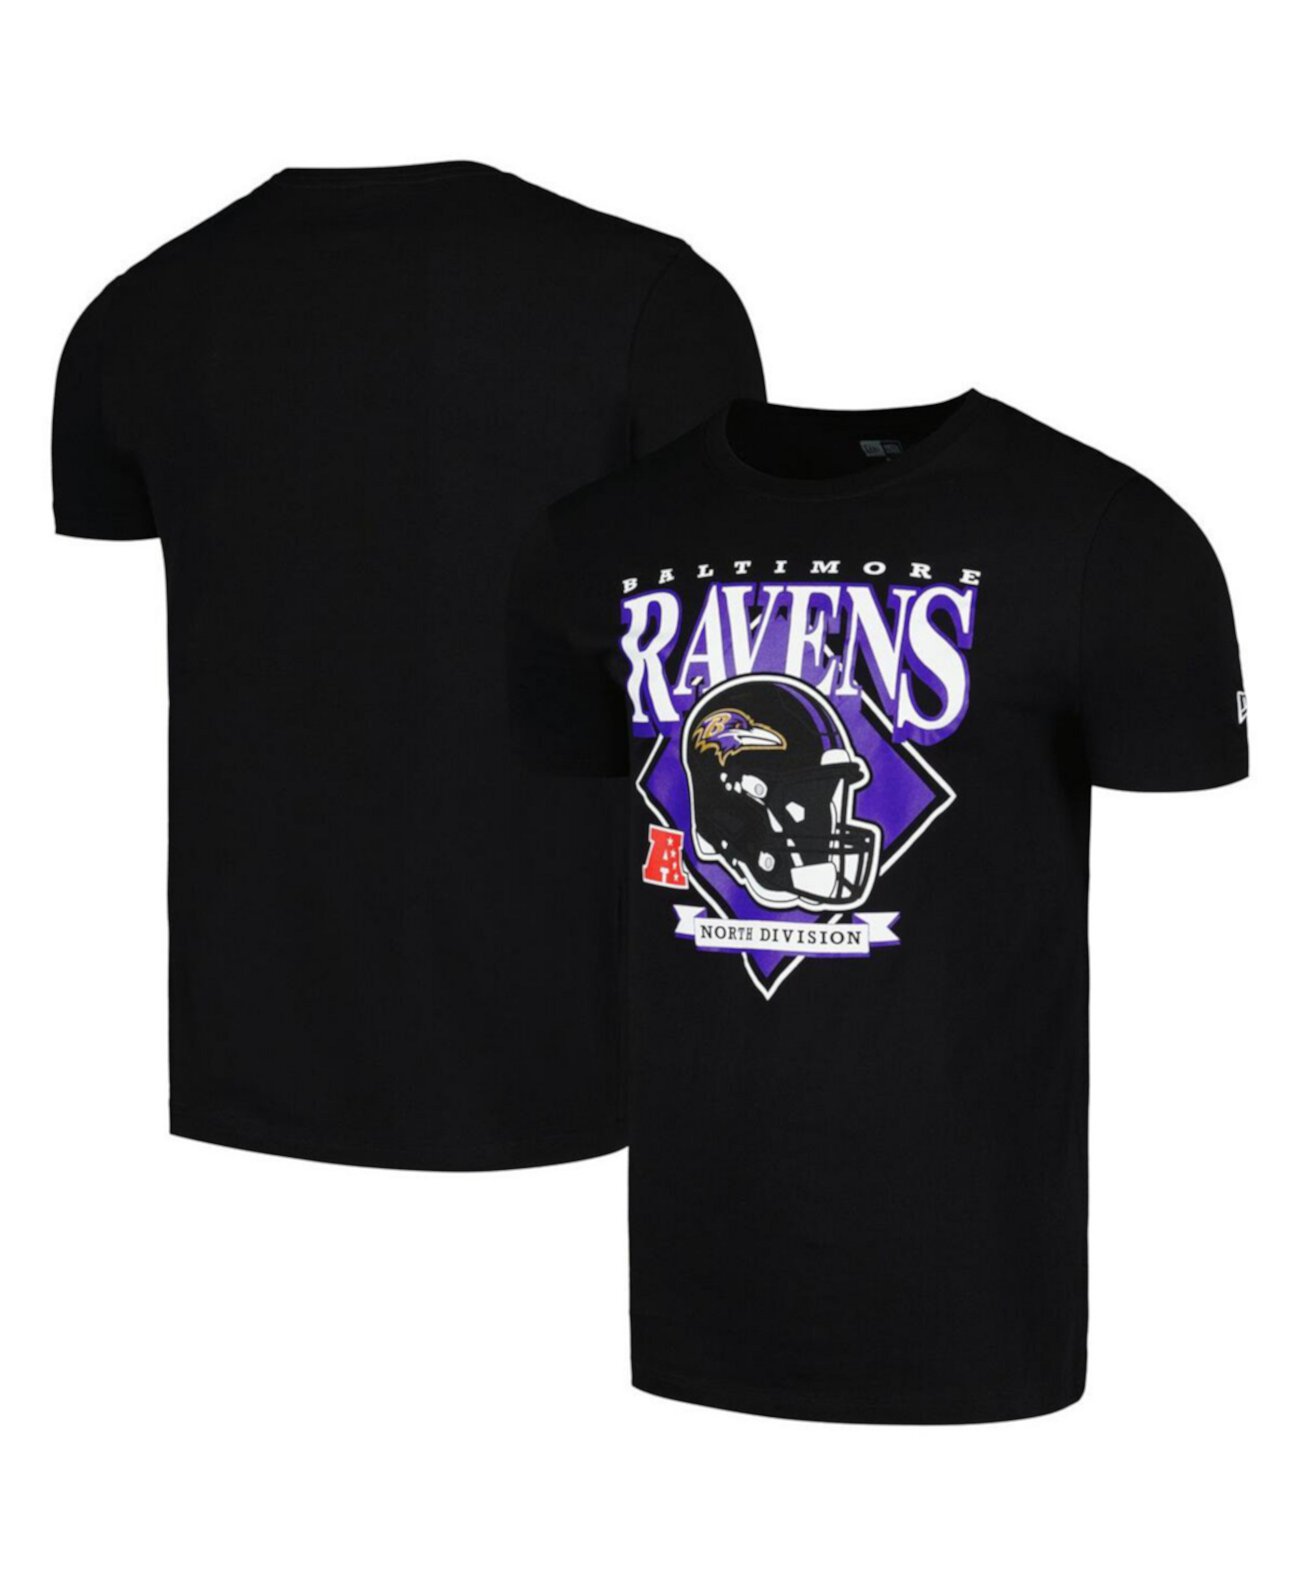 Мужская черная футболка с логотипом команды Baltimore Ravens New Era